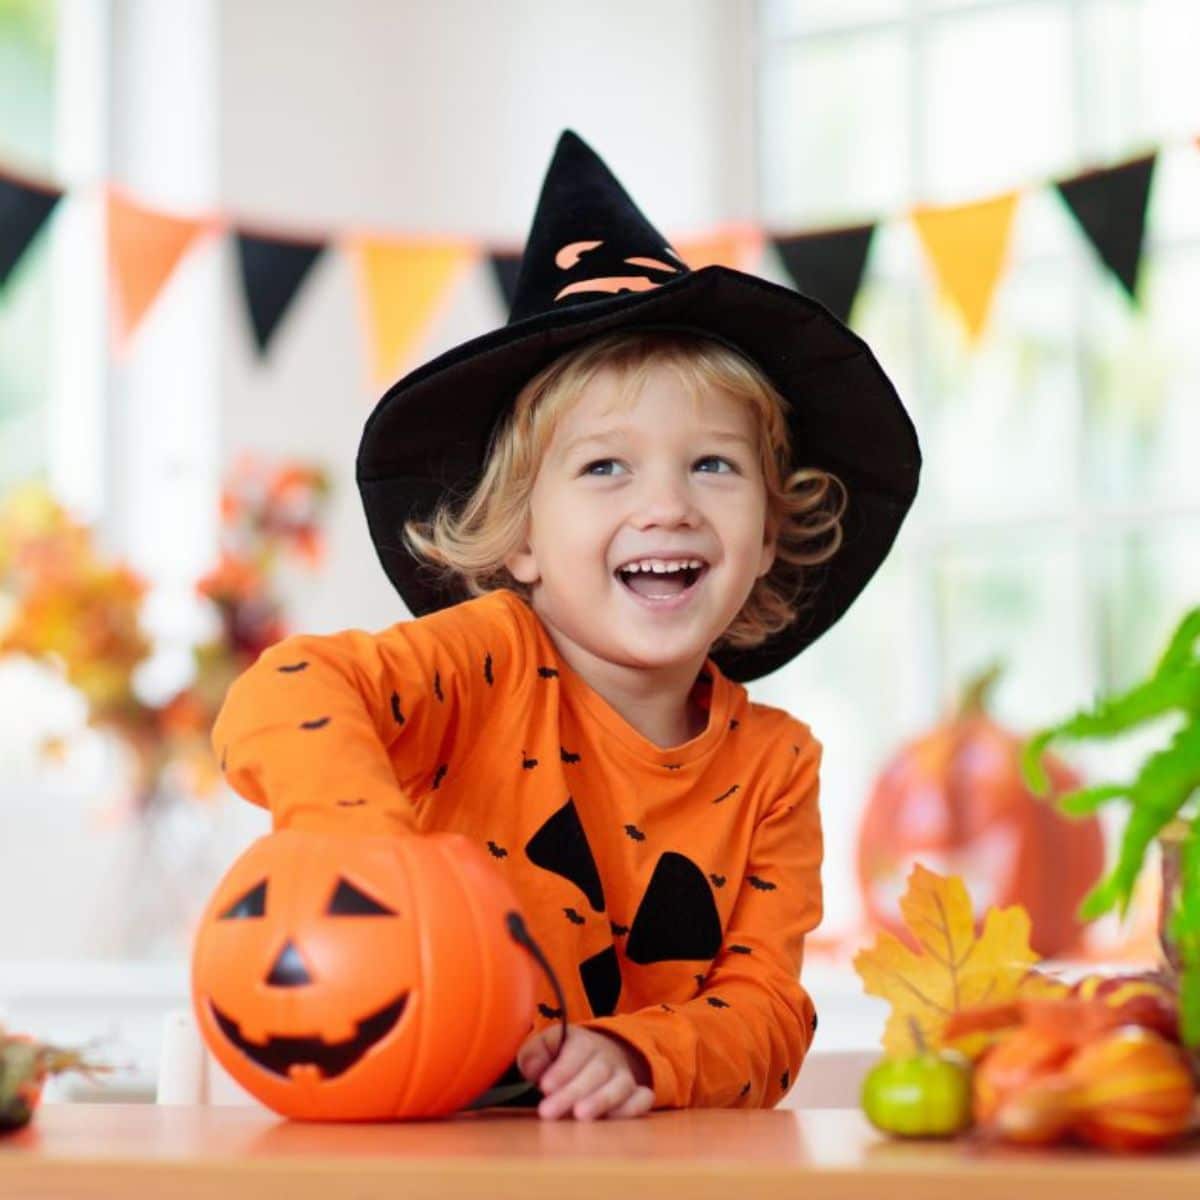 Kid in a halloween costume putting hand in a pumpkin.